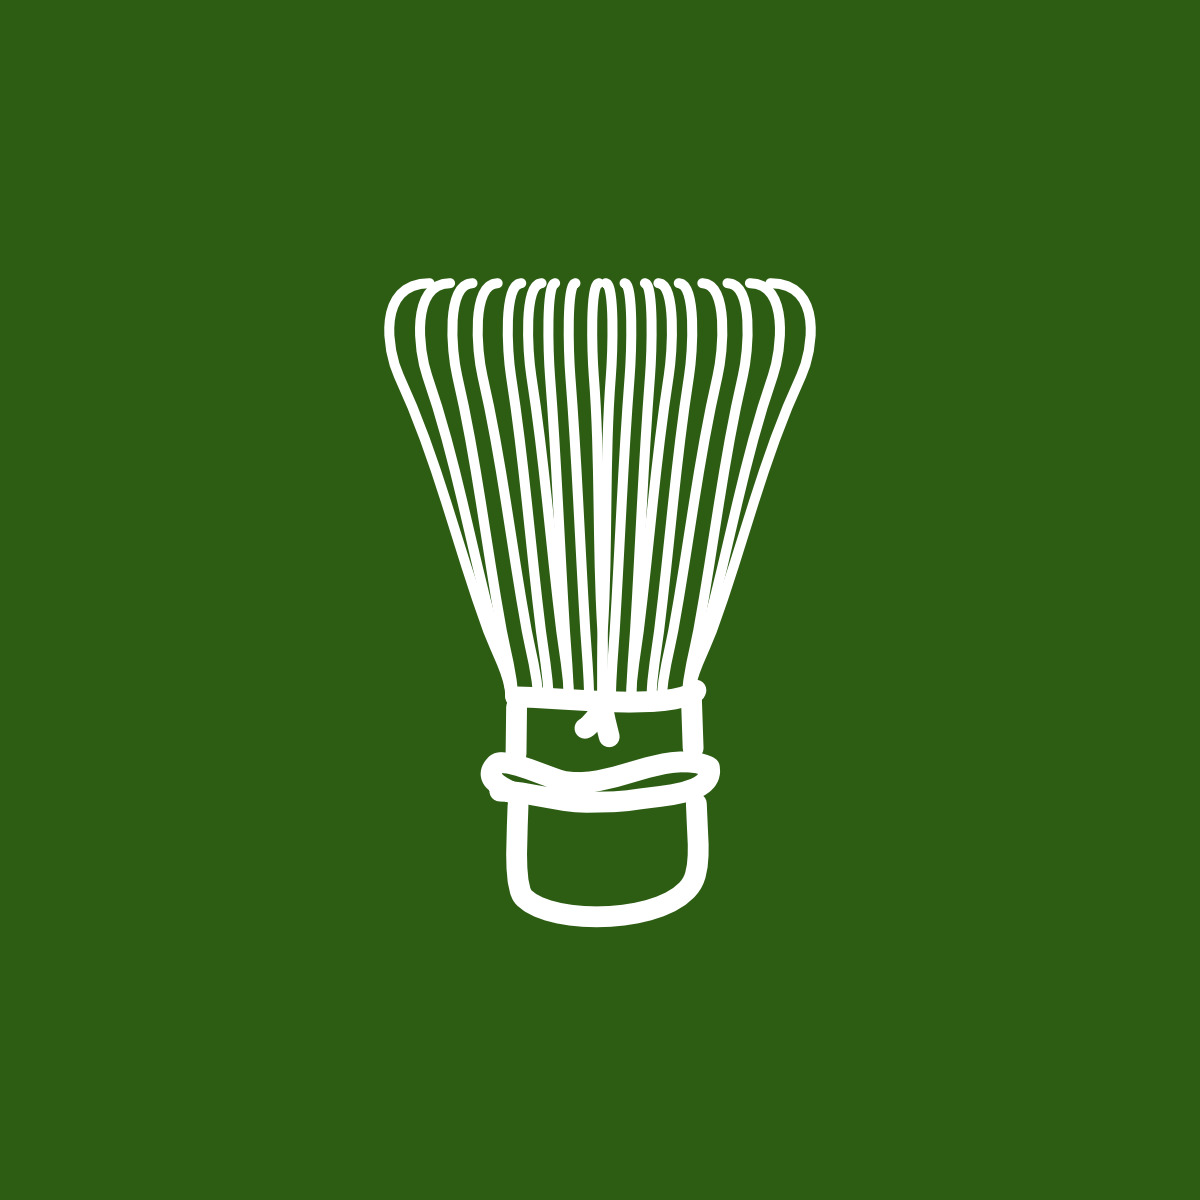 Matcha whisk icon on green background.